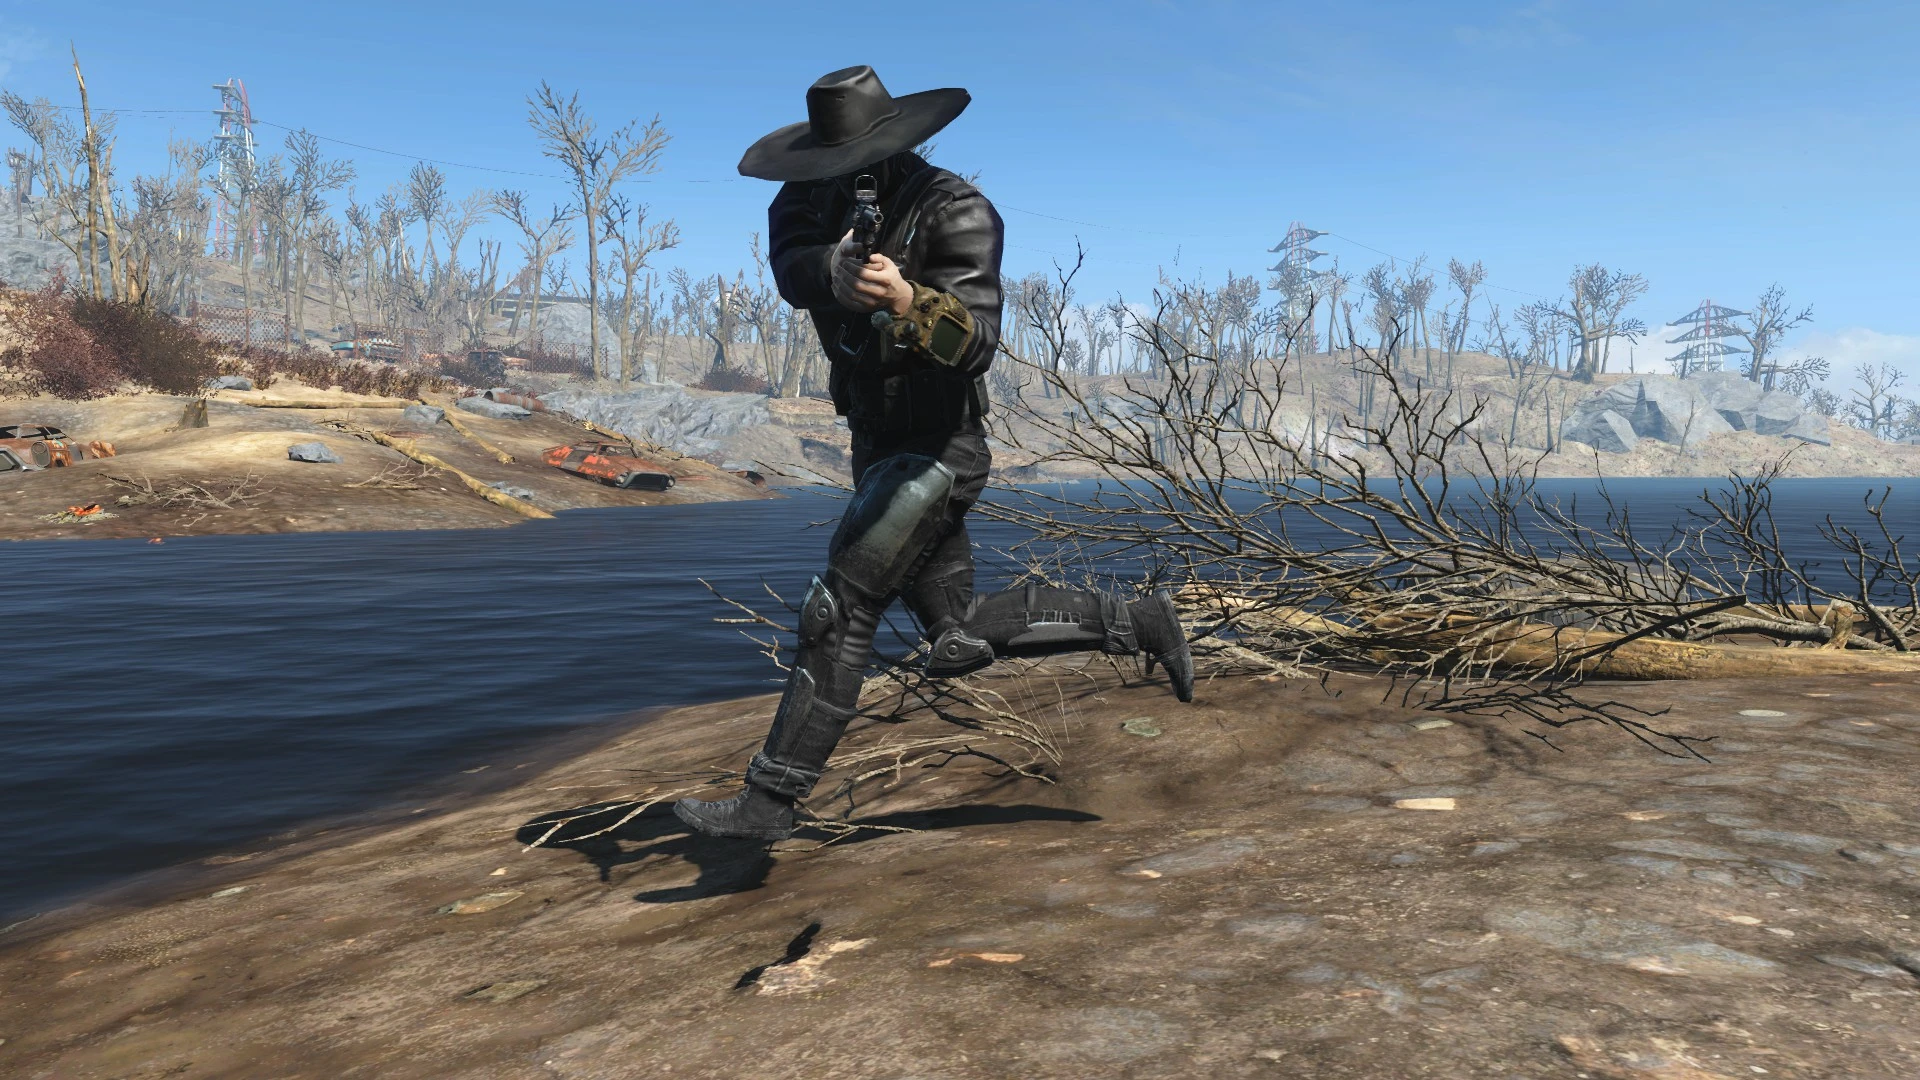 Fallout ковбой. Fallout 4 Cowboy outfit. Фоллаут 4 ковбойская одежда. Фоллаут 4 одежда ковбоя. Кантри Кроссинг Fallout 4.